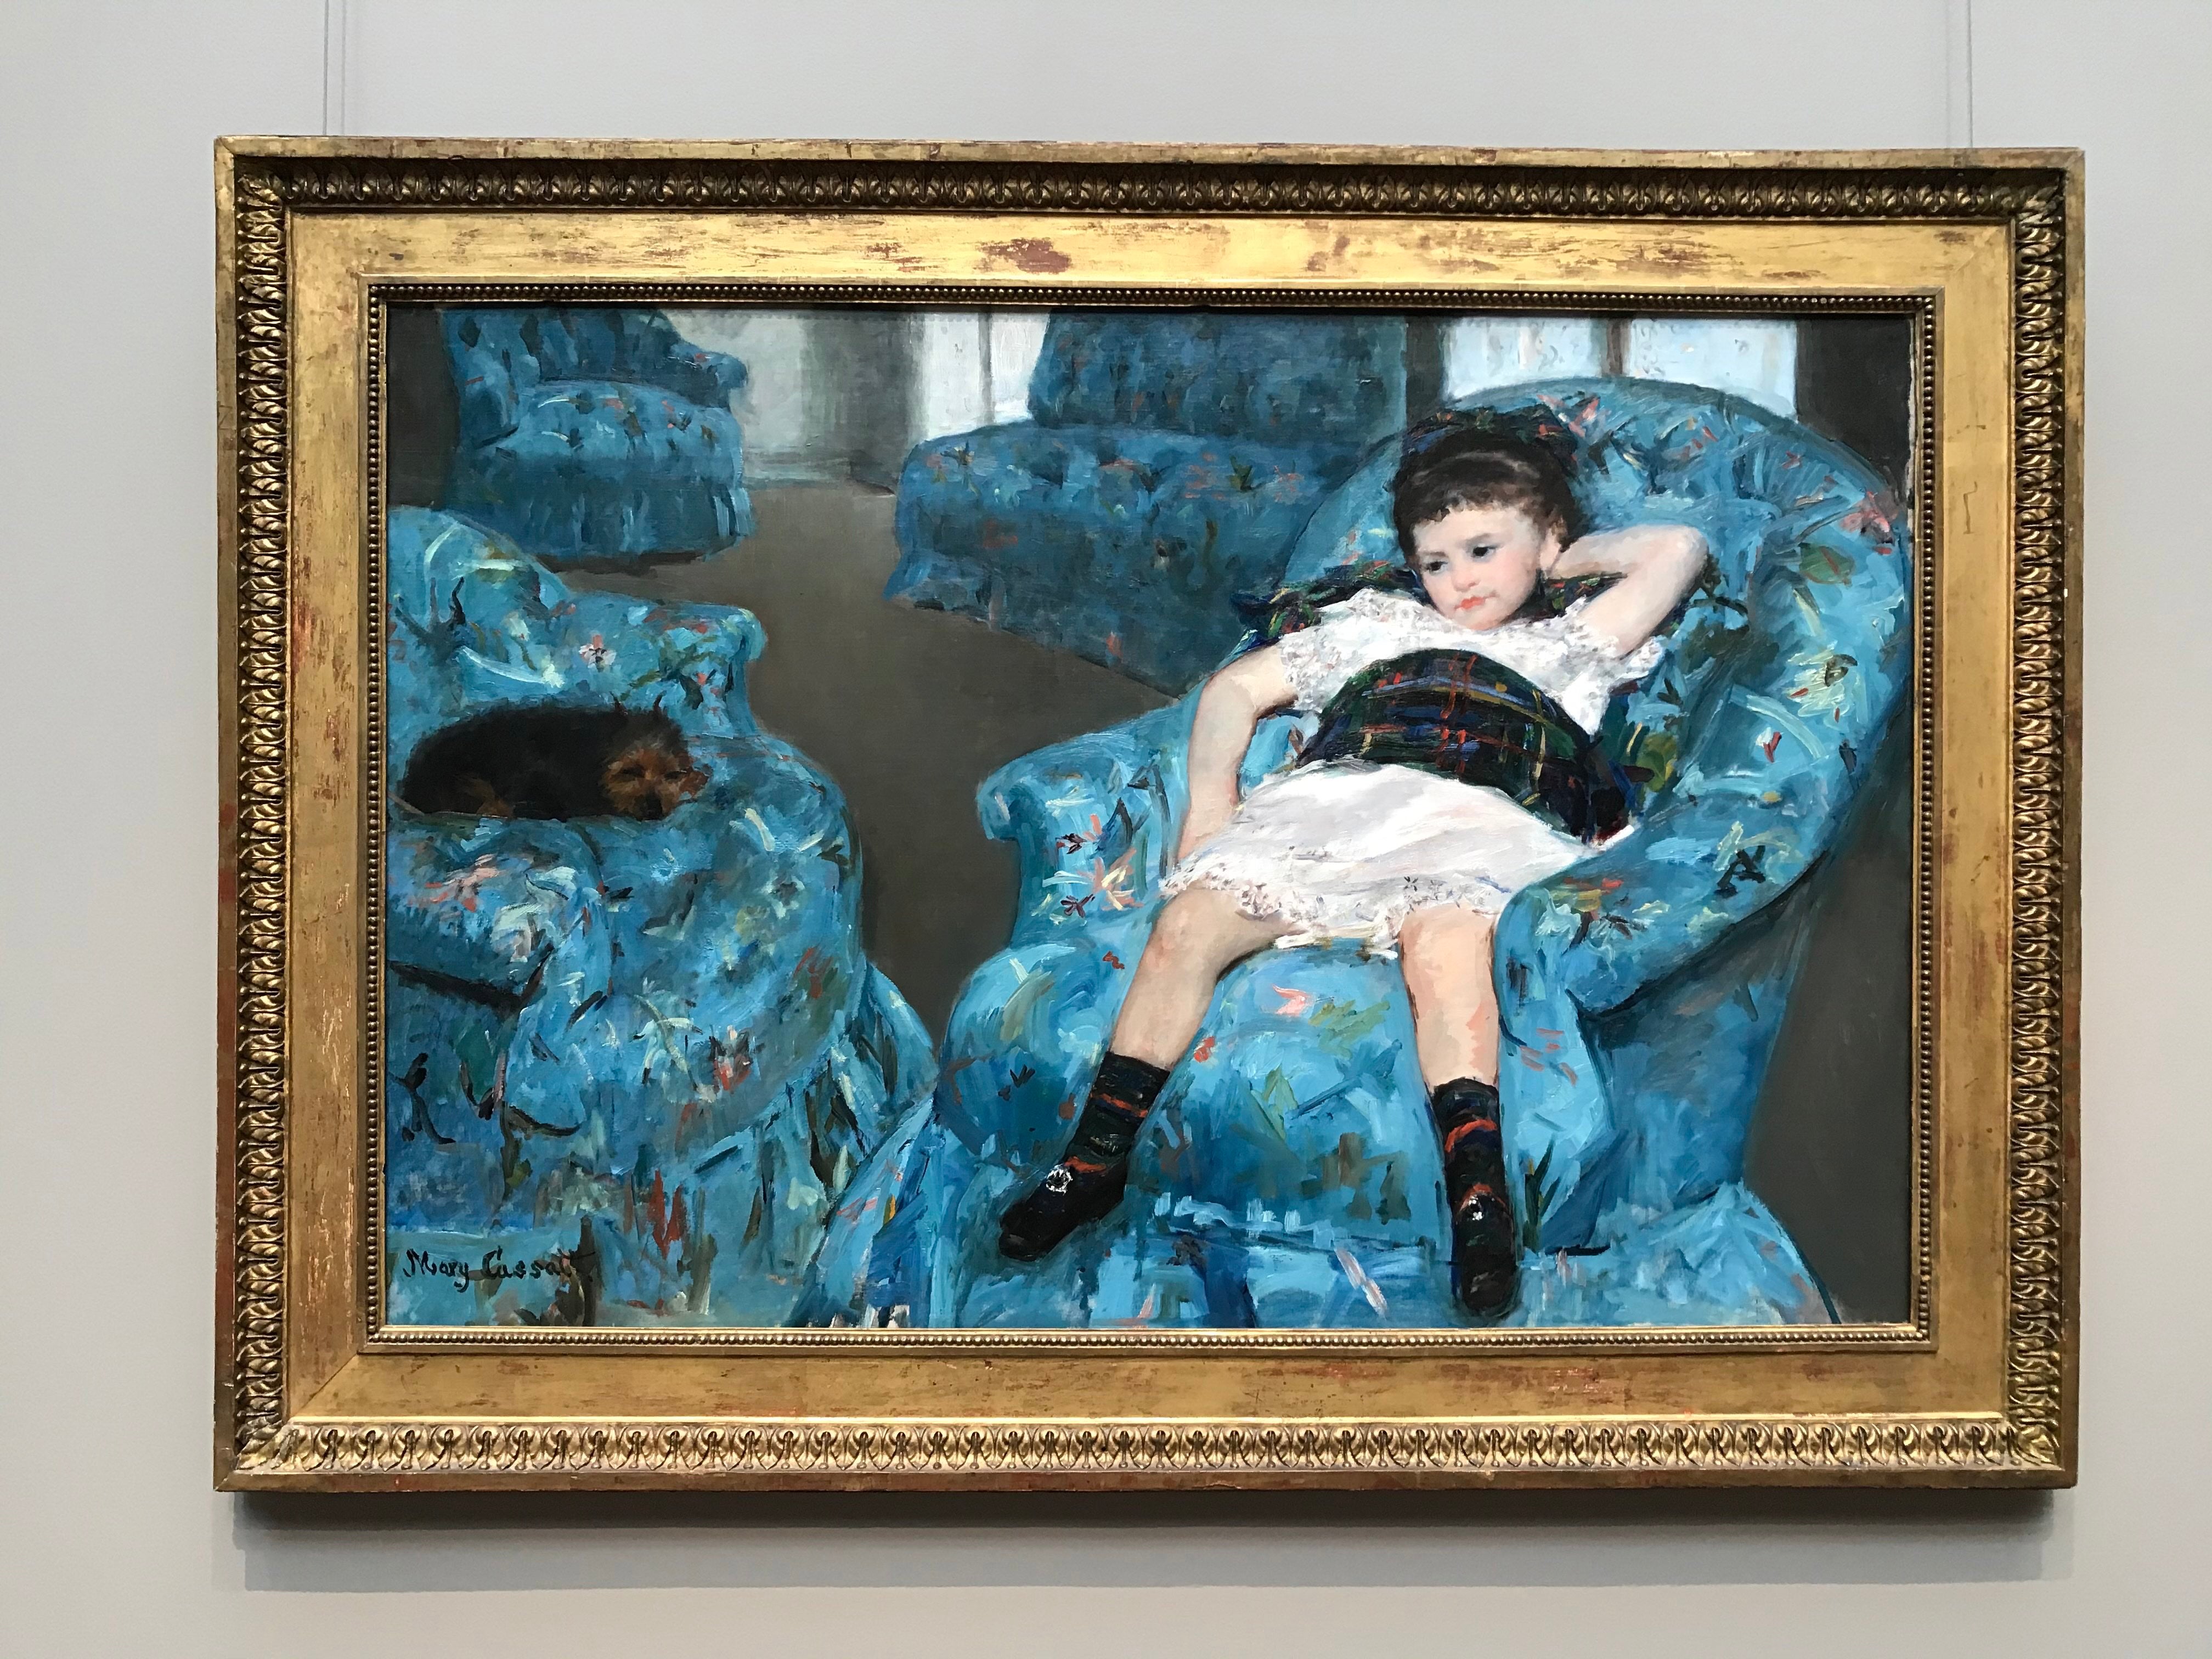 Mavi koltukta küçük kız